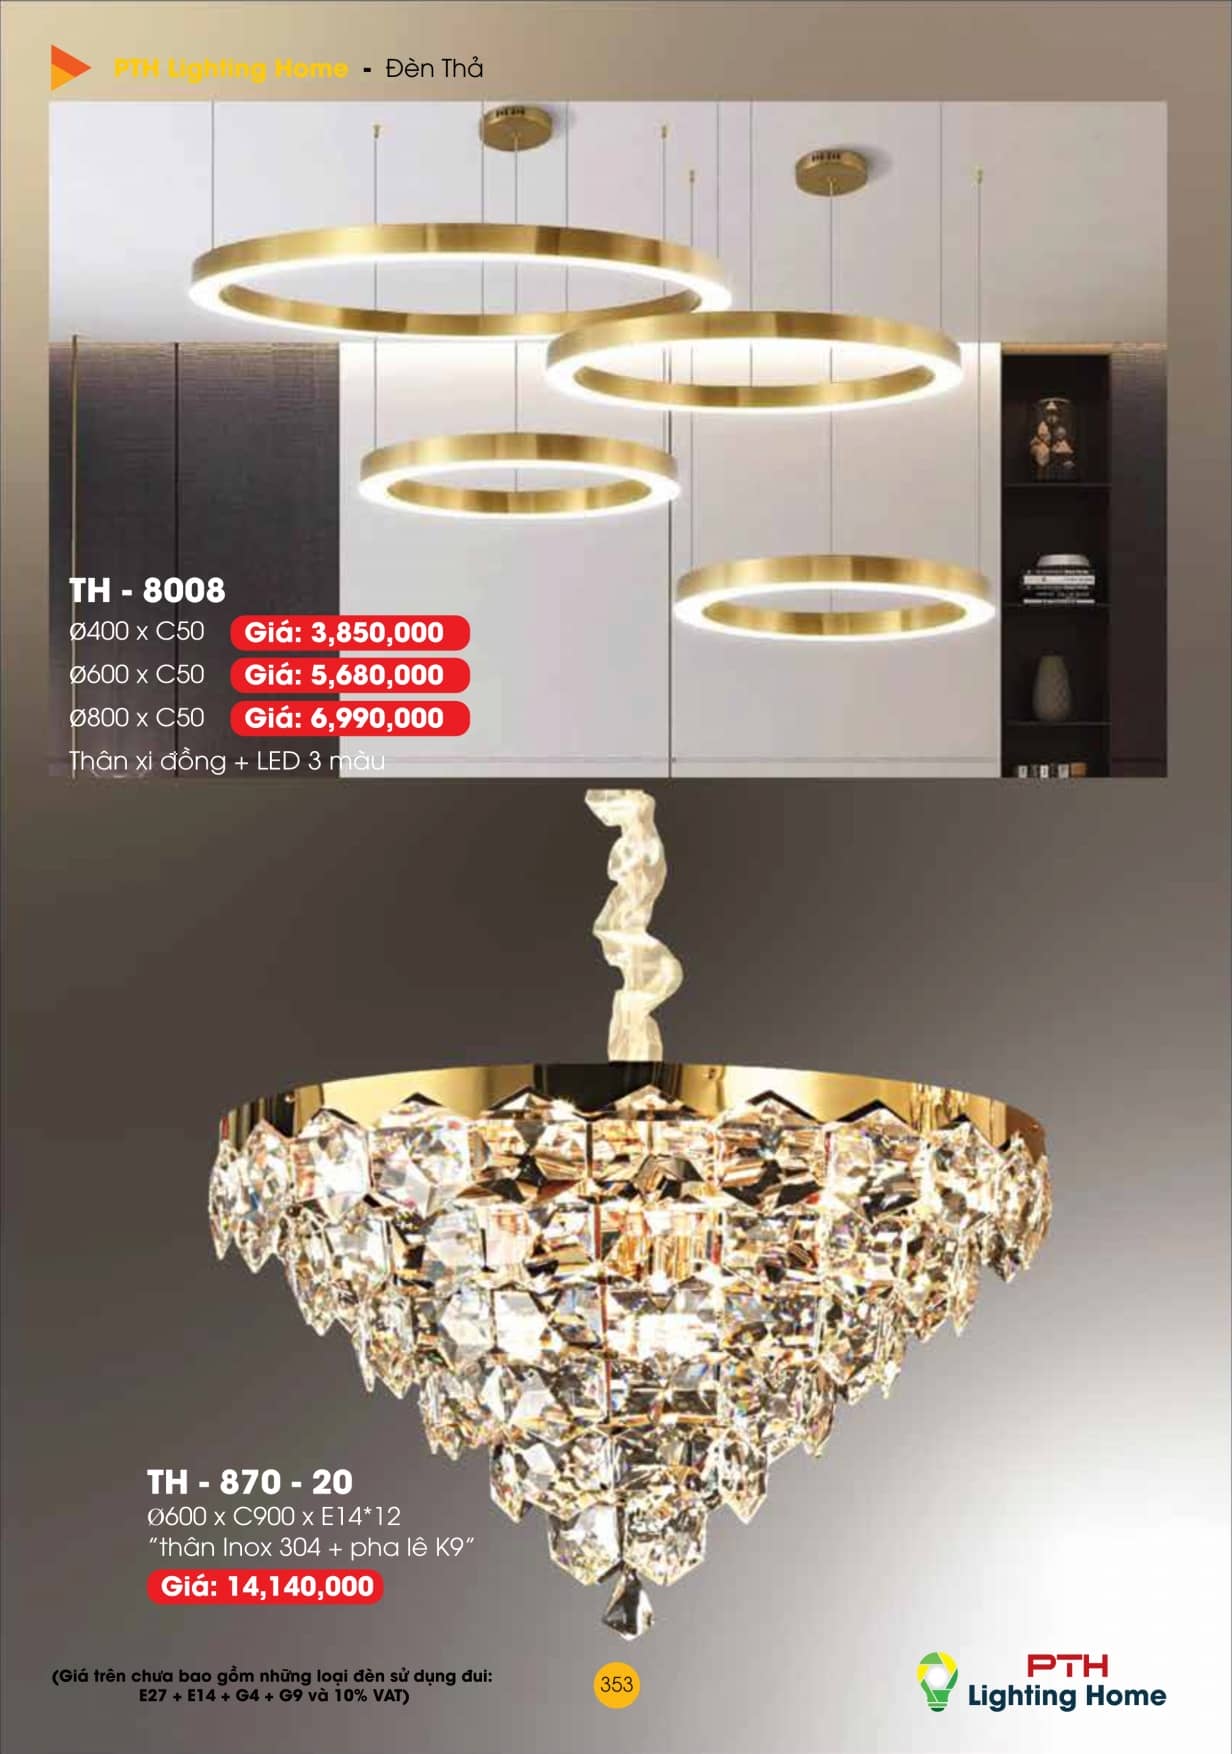 catalogue-bang-gia-den-led-trang-tri-pth-lighting-home-355